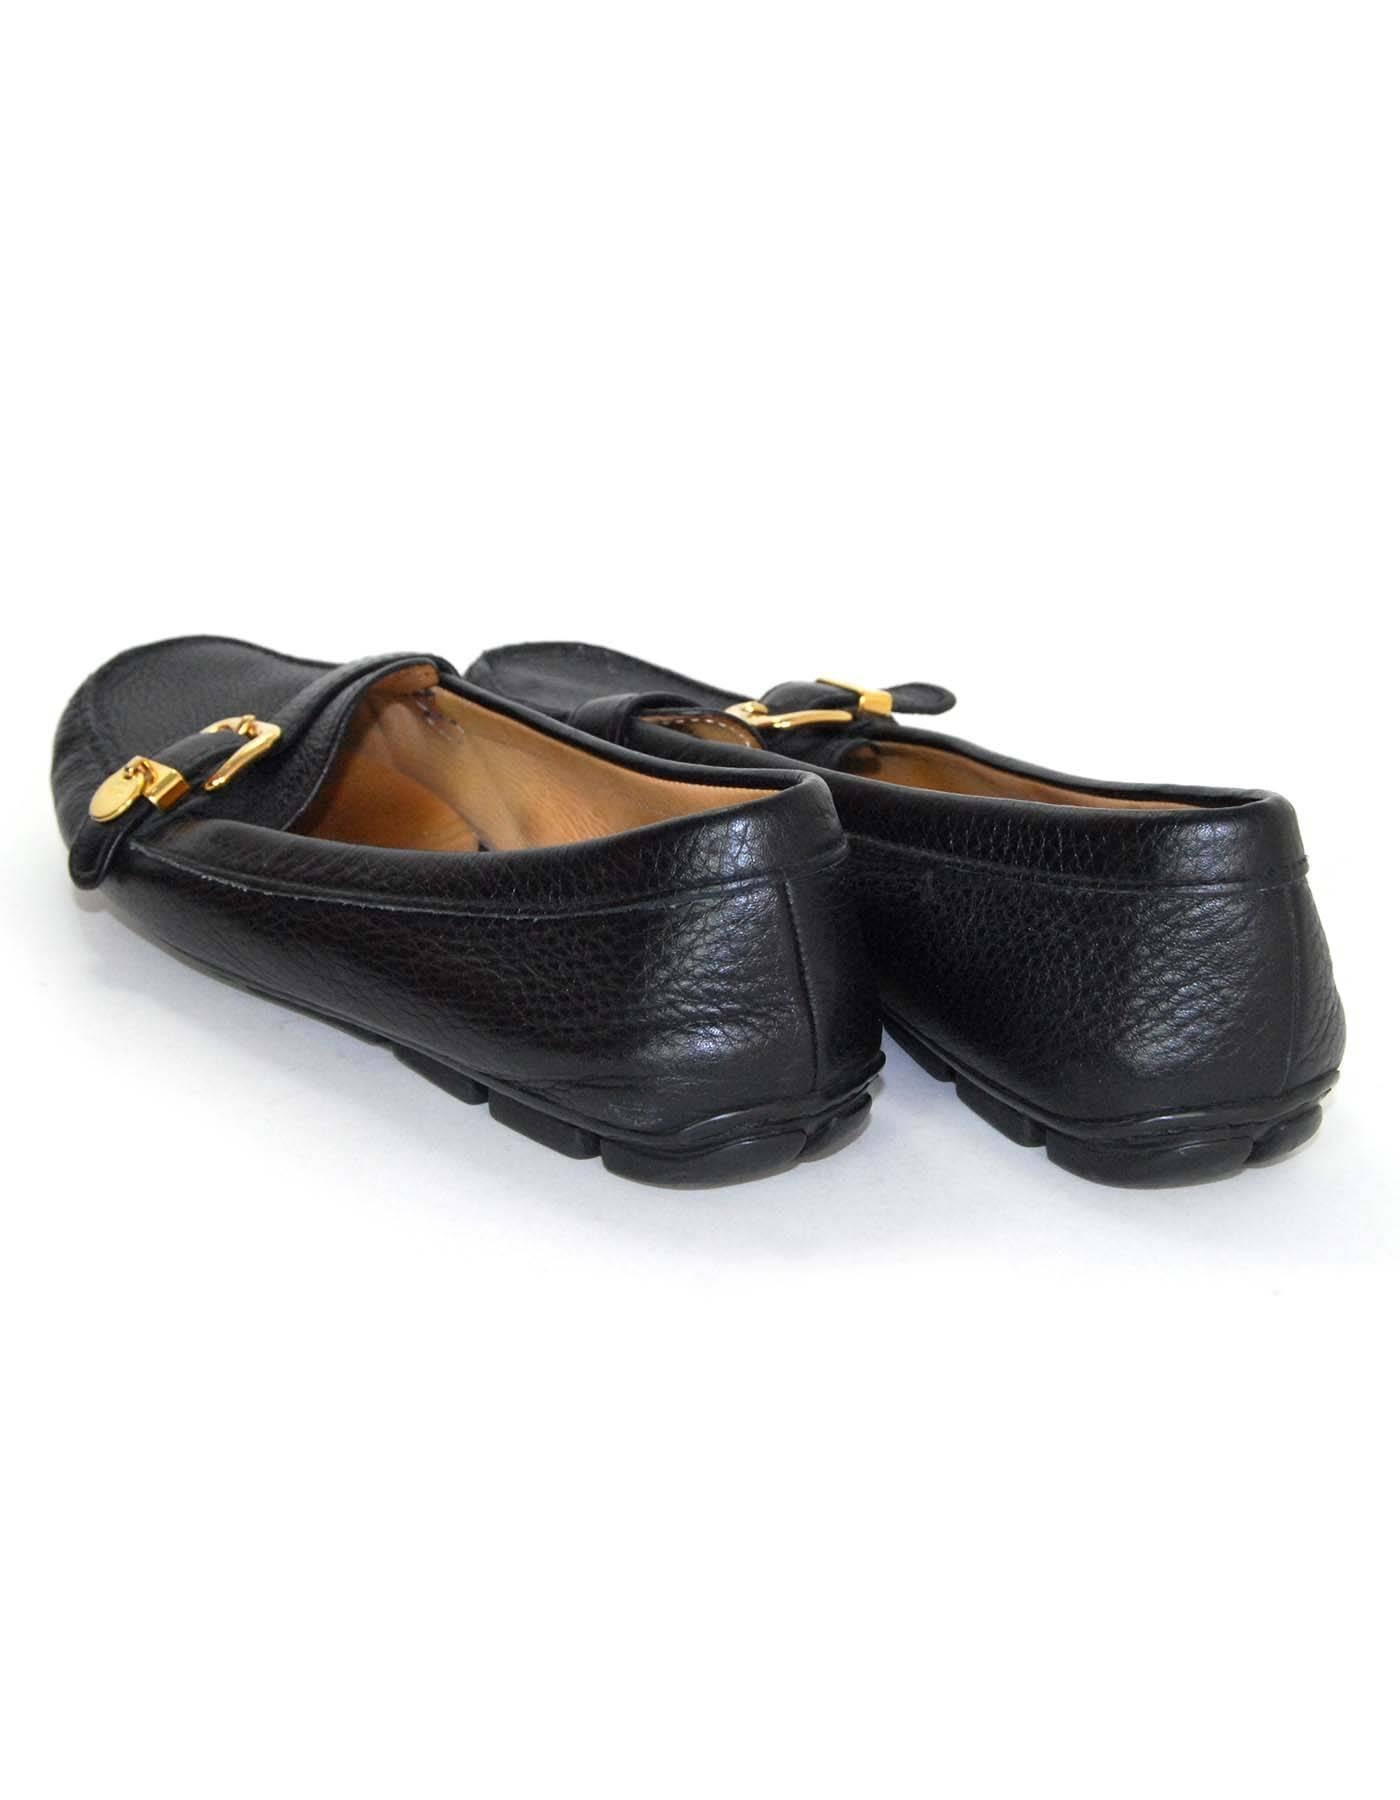 Prada Black Leather Driving Loafers Sz 40.5 1